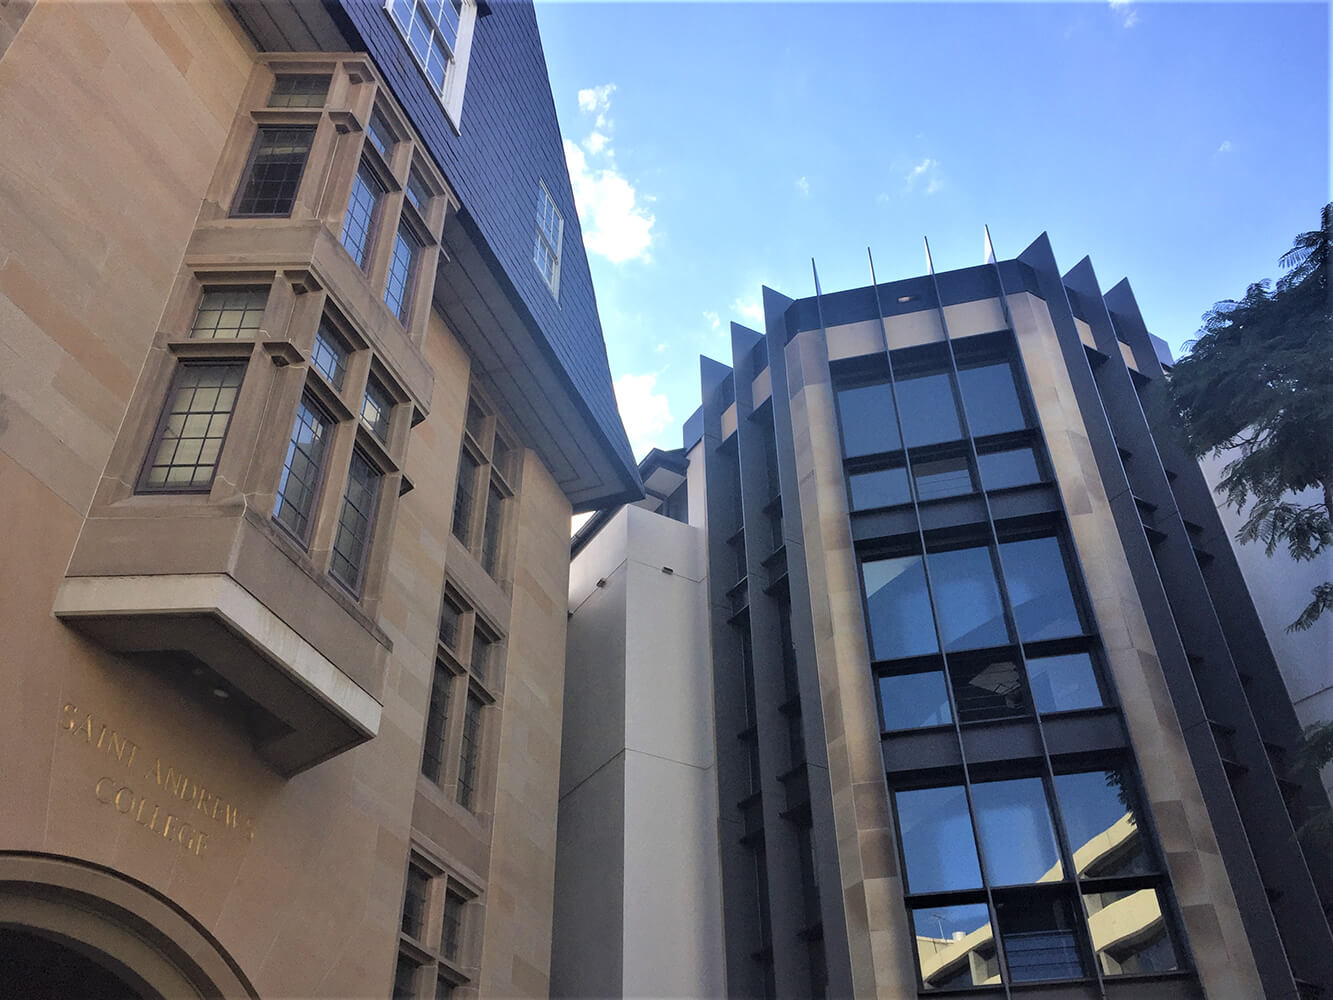 St Andrews College – University of Sydney